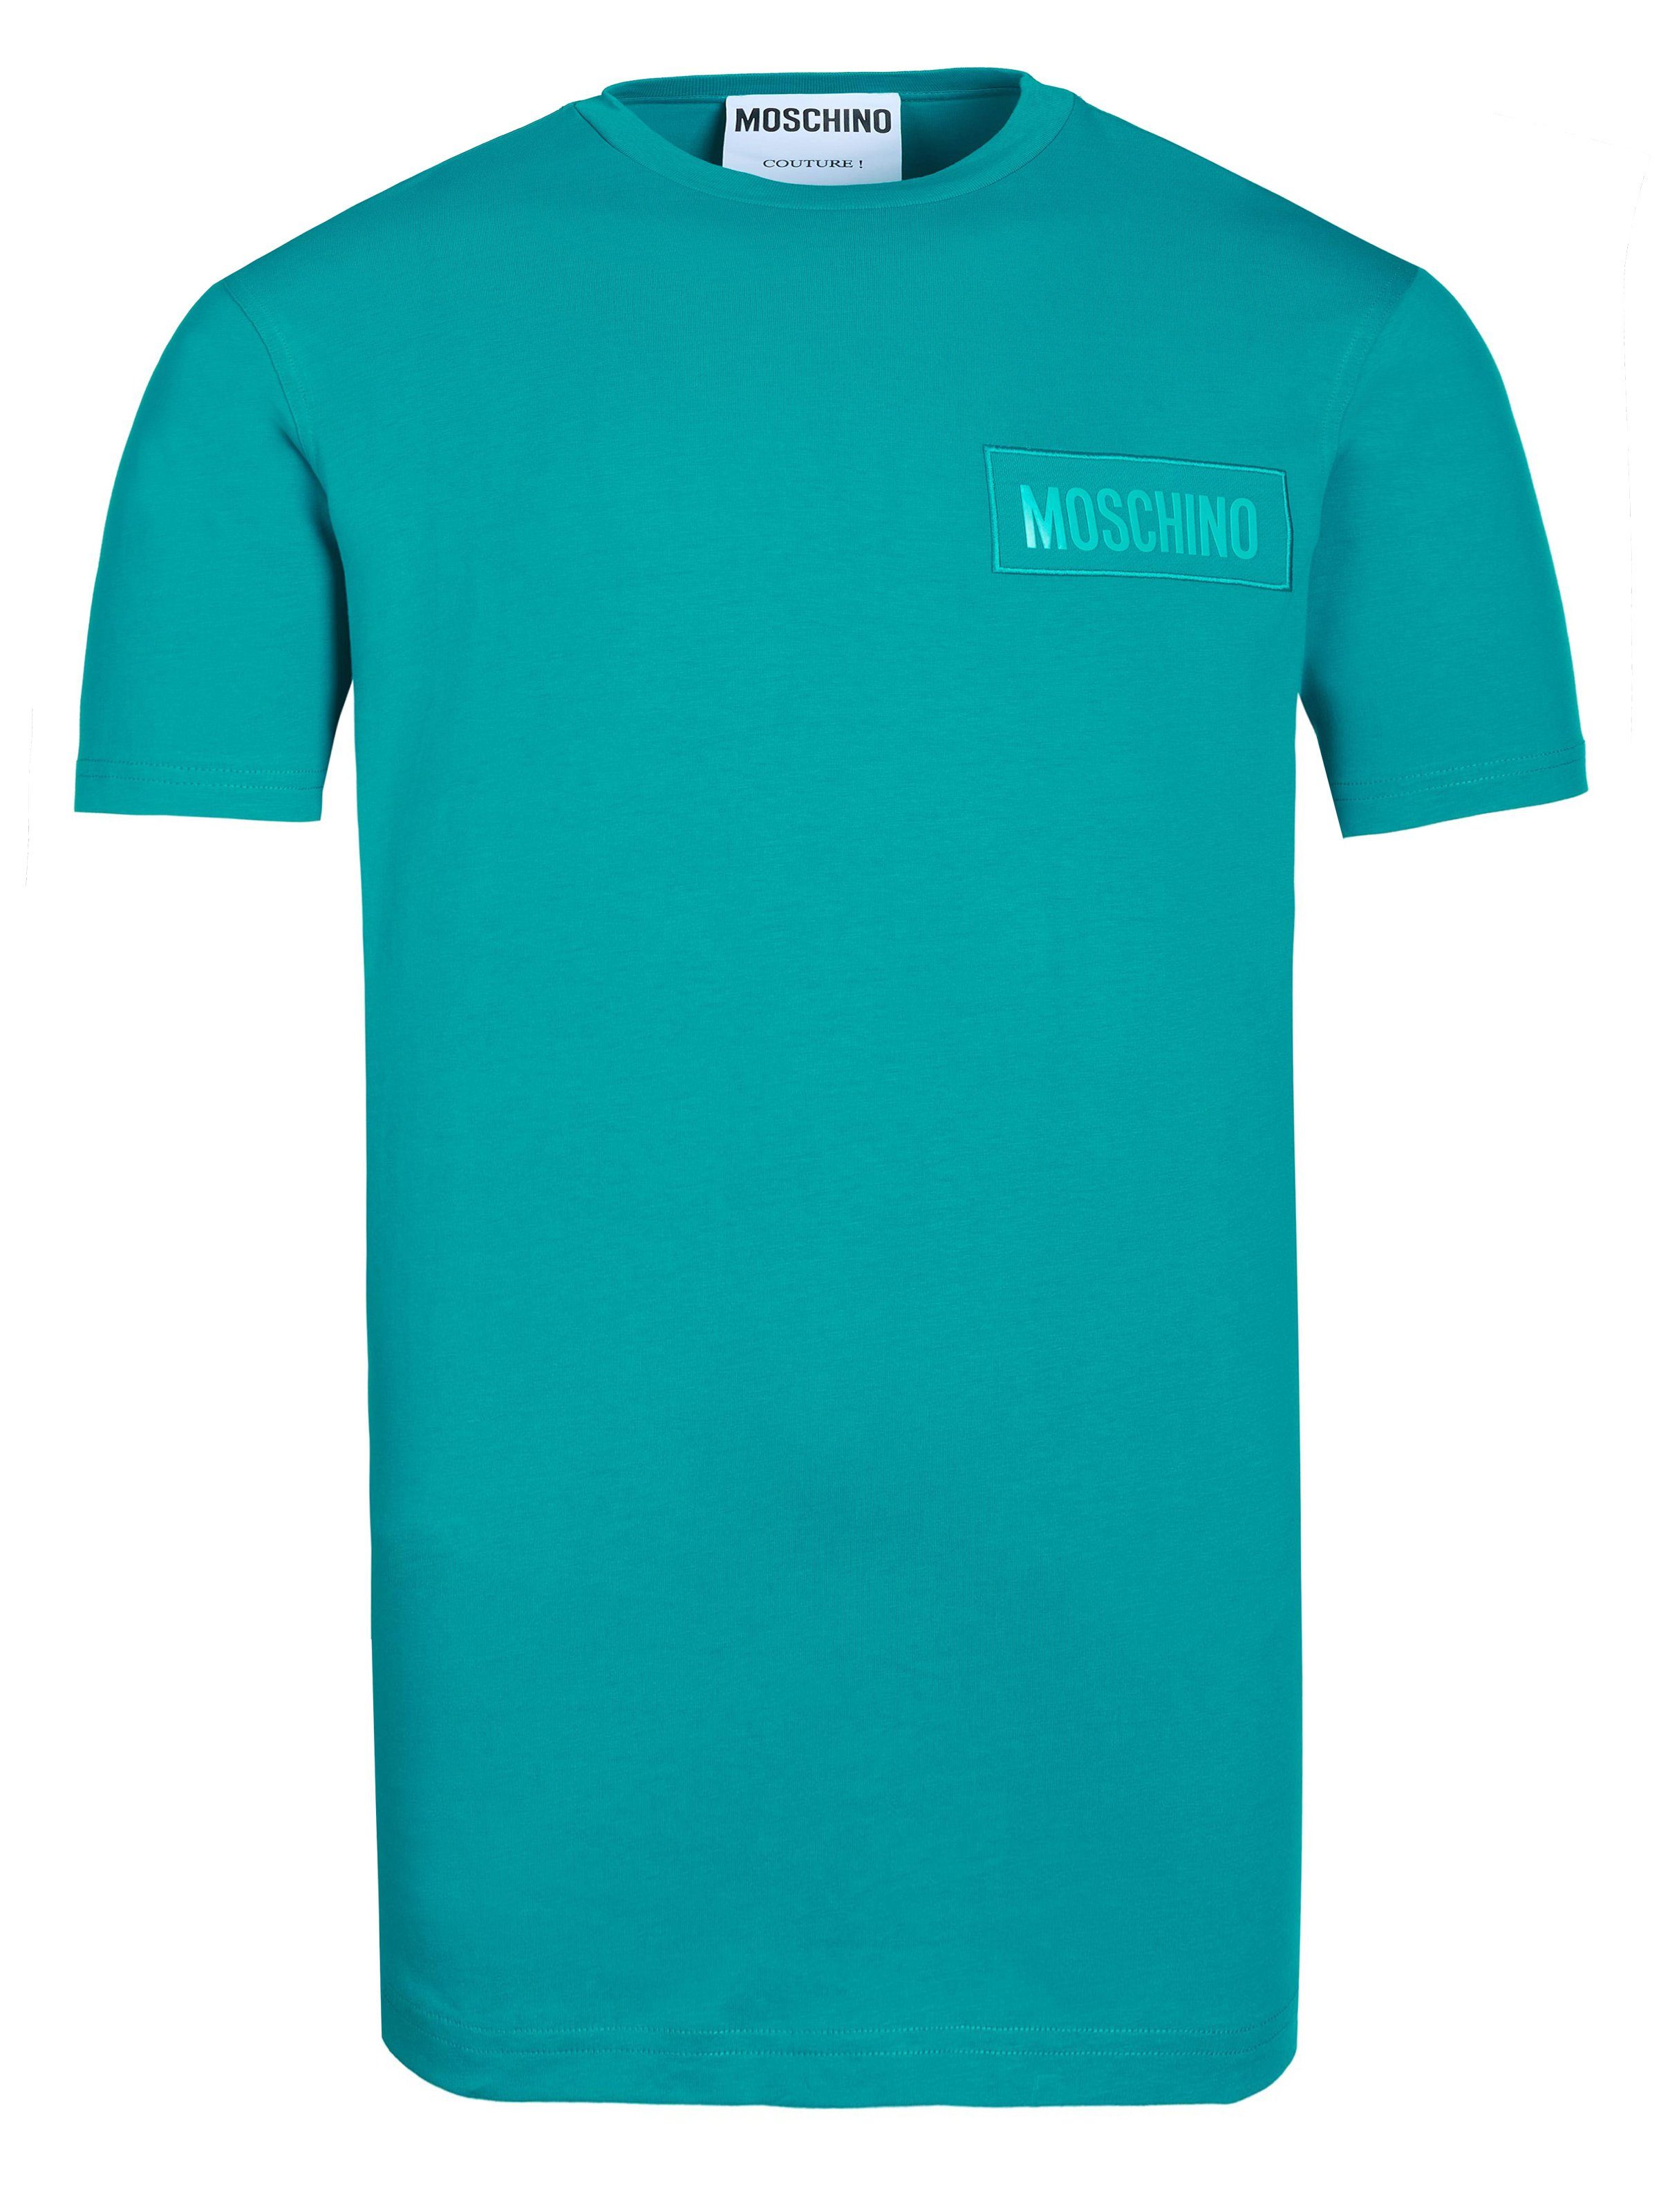 Moschino T-Shirt Moschino Couture! T-Shirt blau